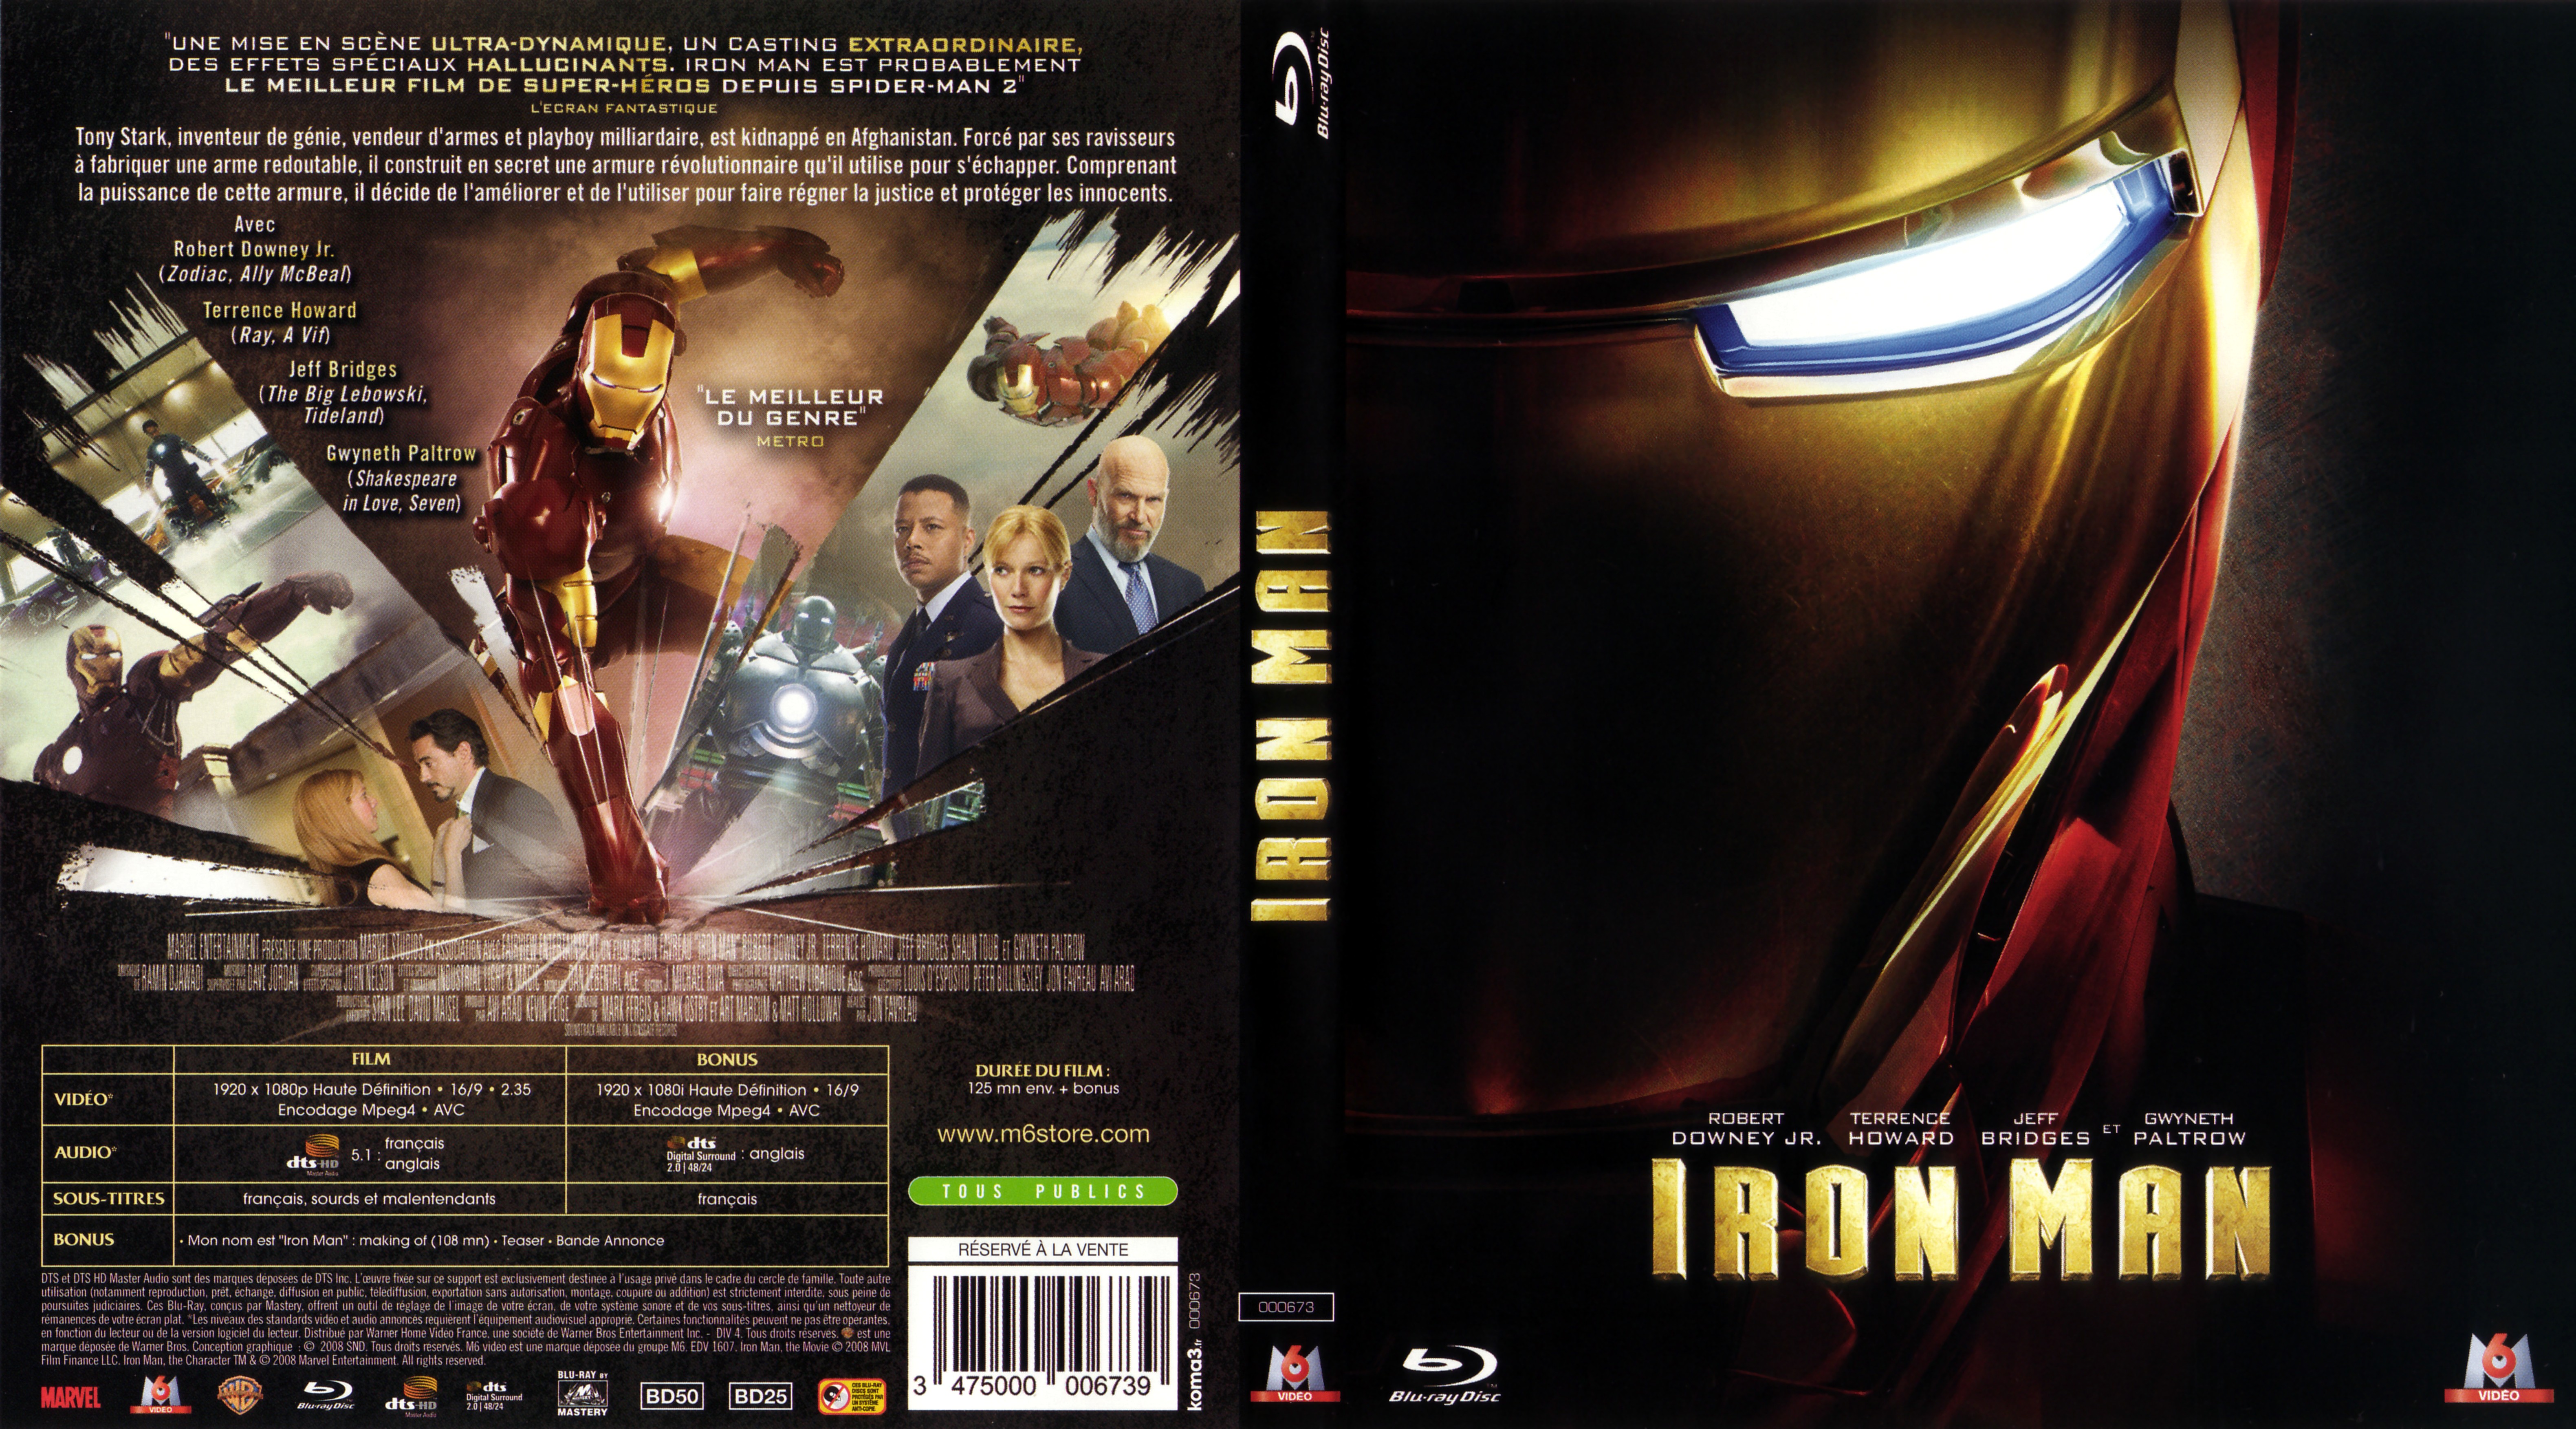 Jaquette DVD Iron Man (BLU-RAY) v2